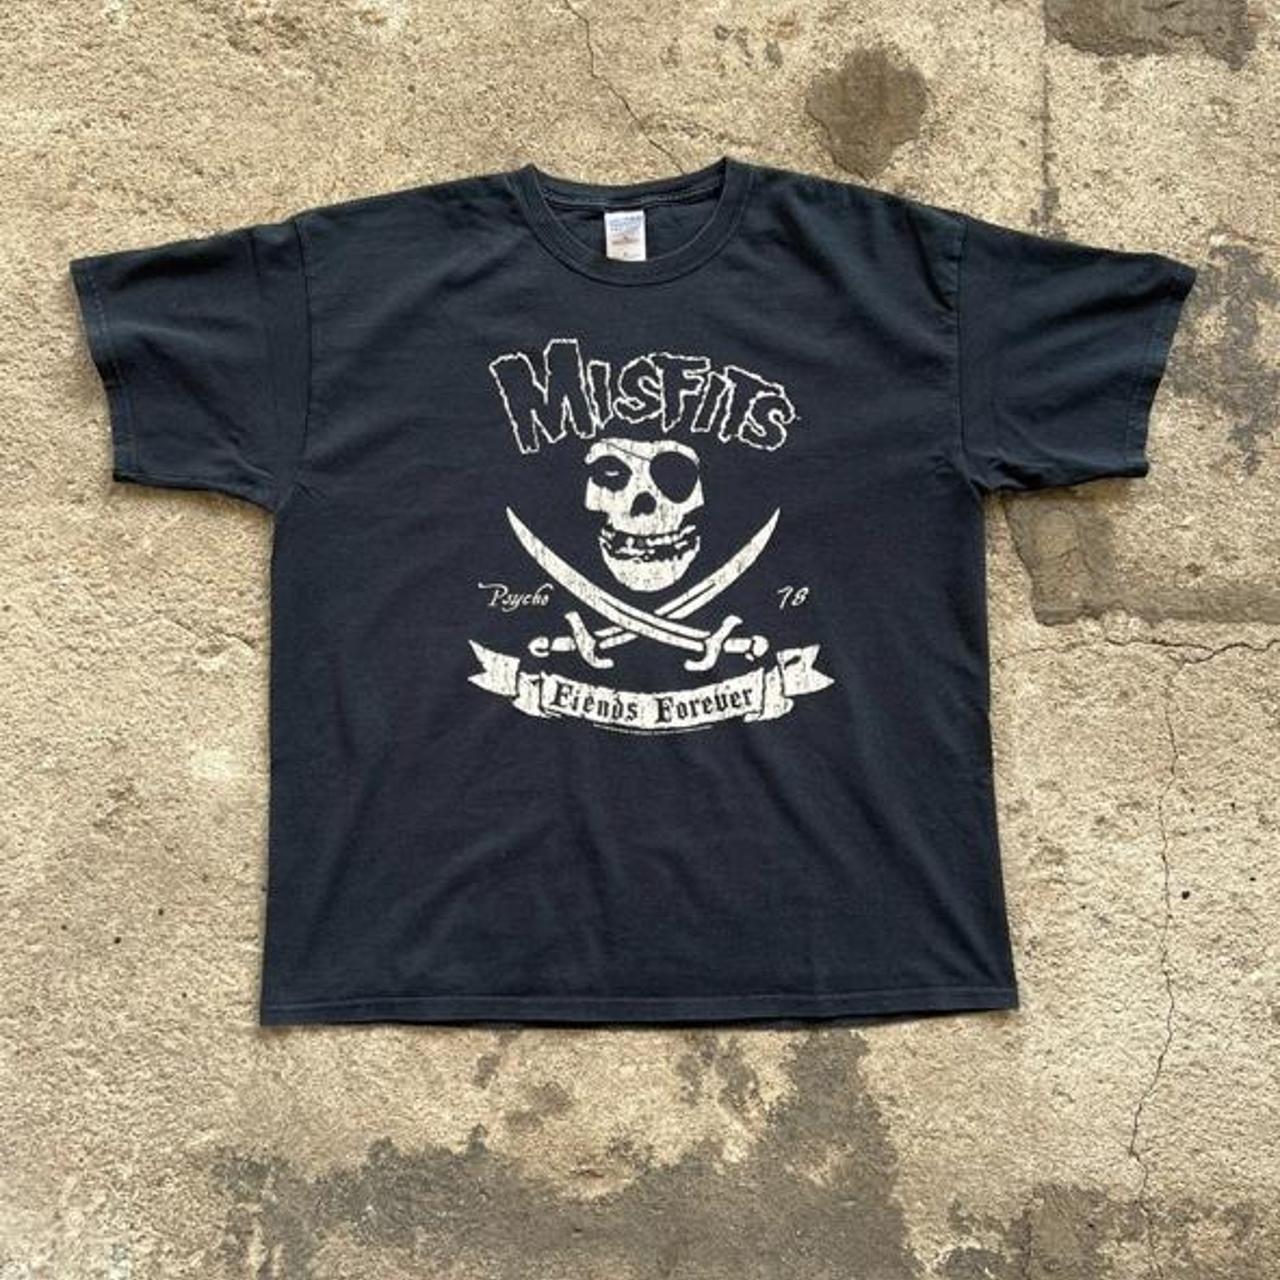 Product Image 1 - Vintage Misfits t-shirt 

Size: XL
Condition: